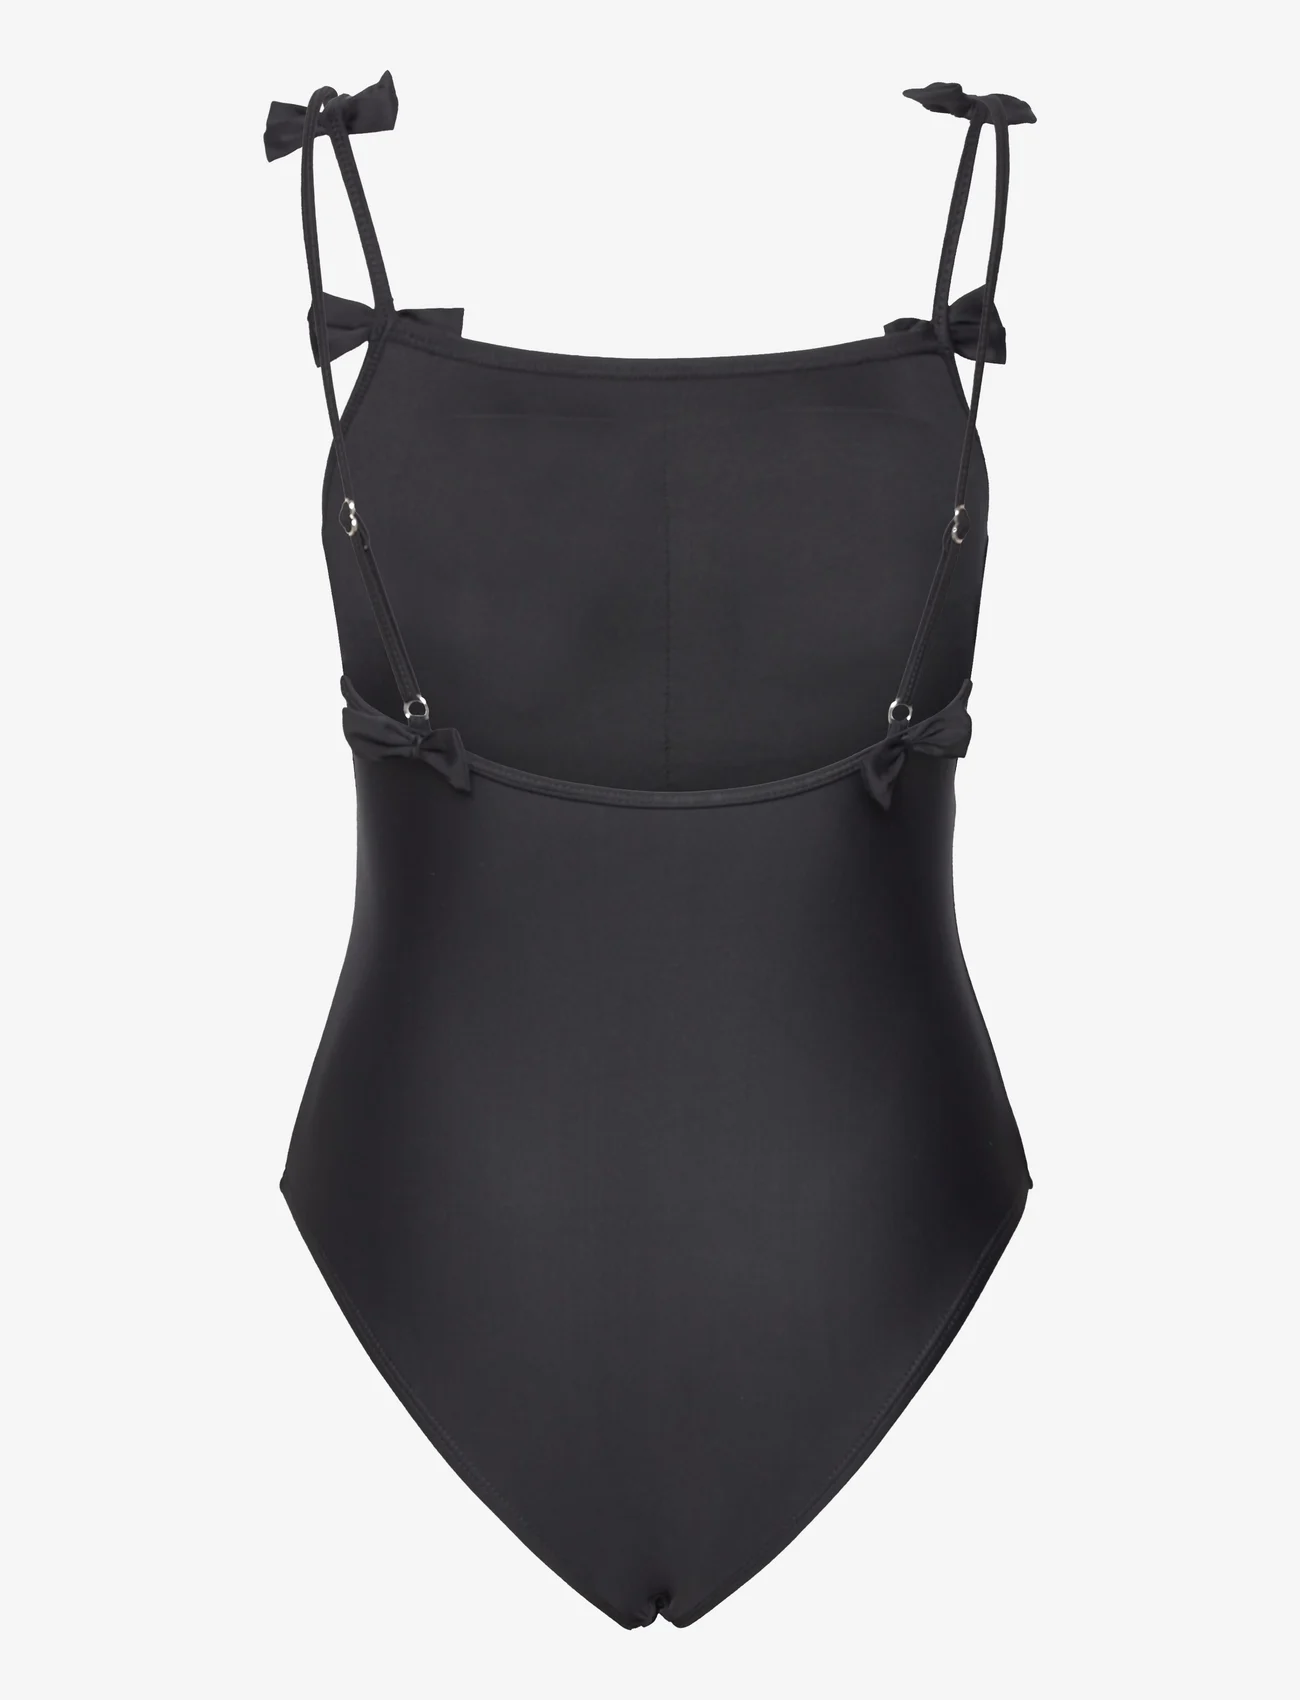 Becksöndergaard - Solid Bow Euna Swimsuit - swimsuits - black - 1